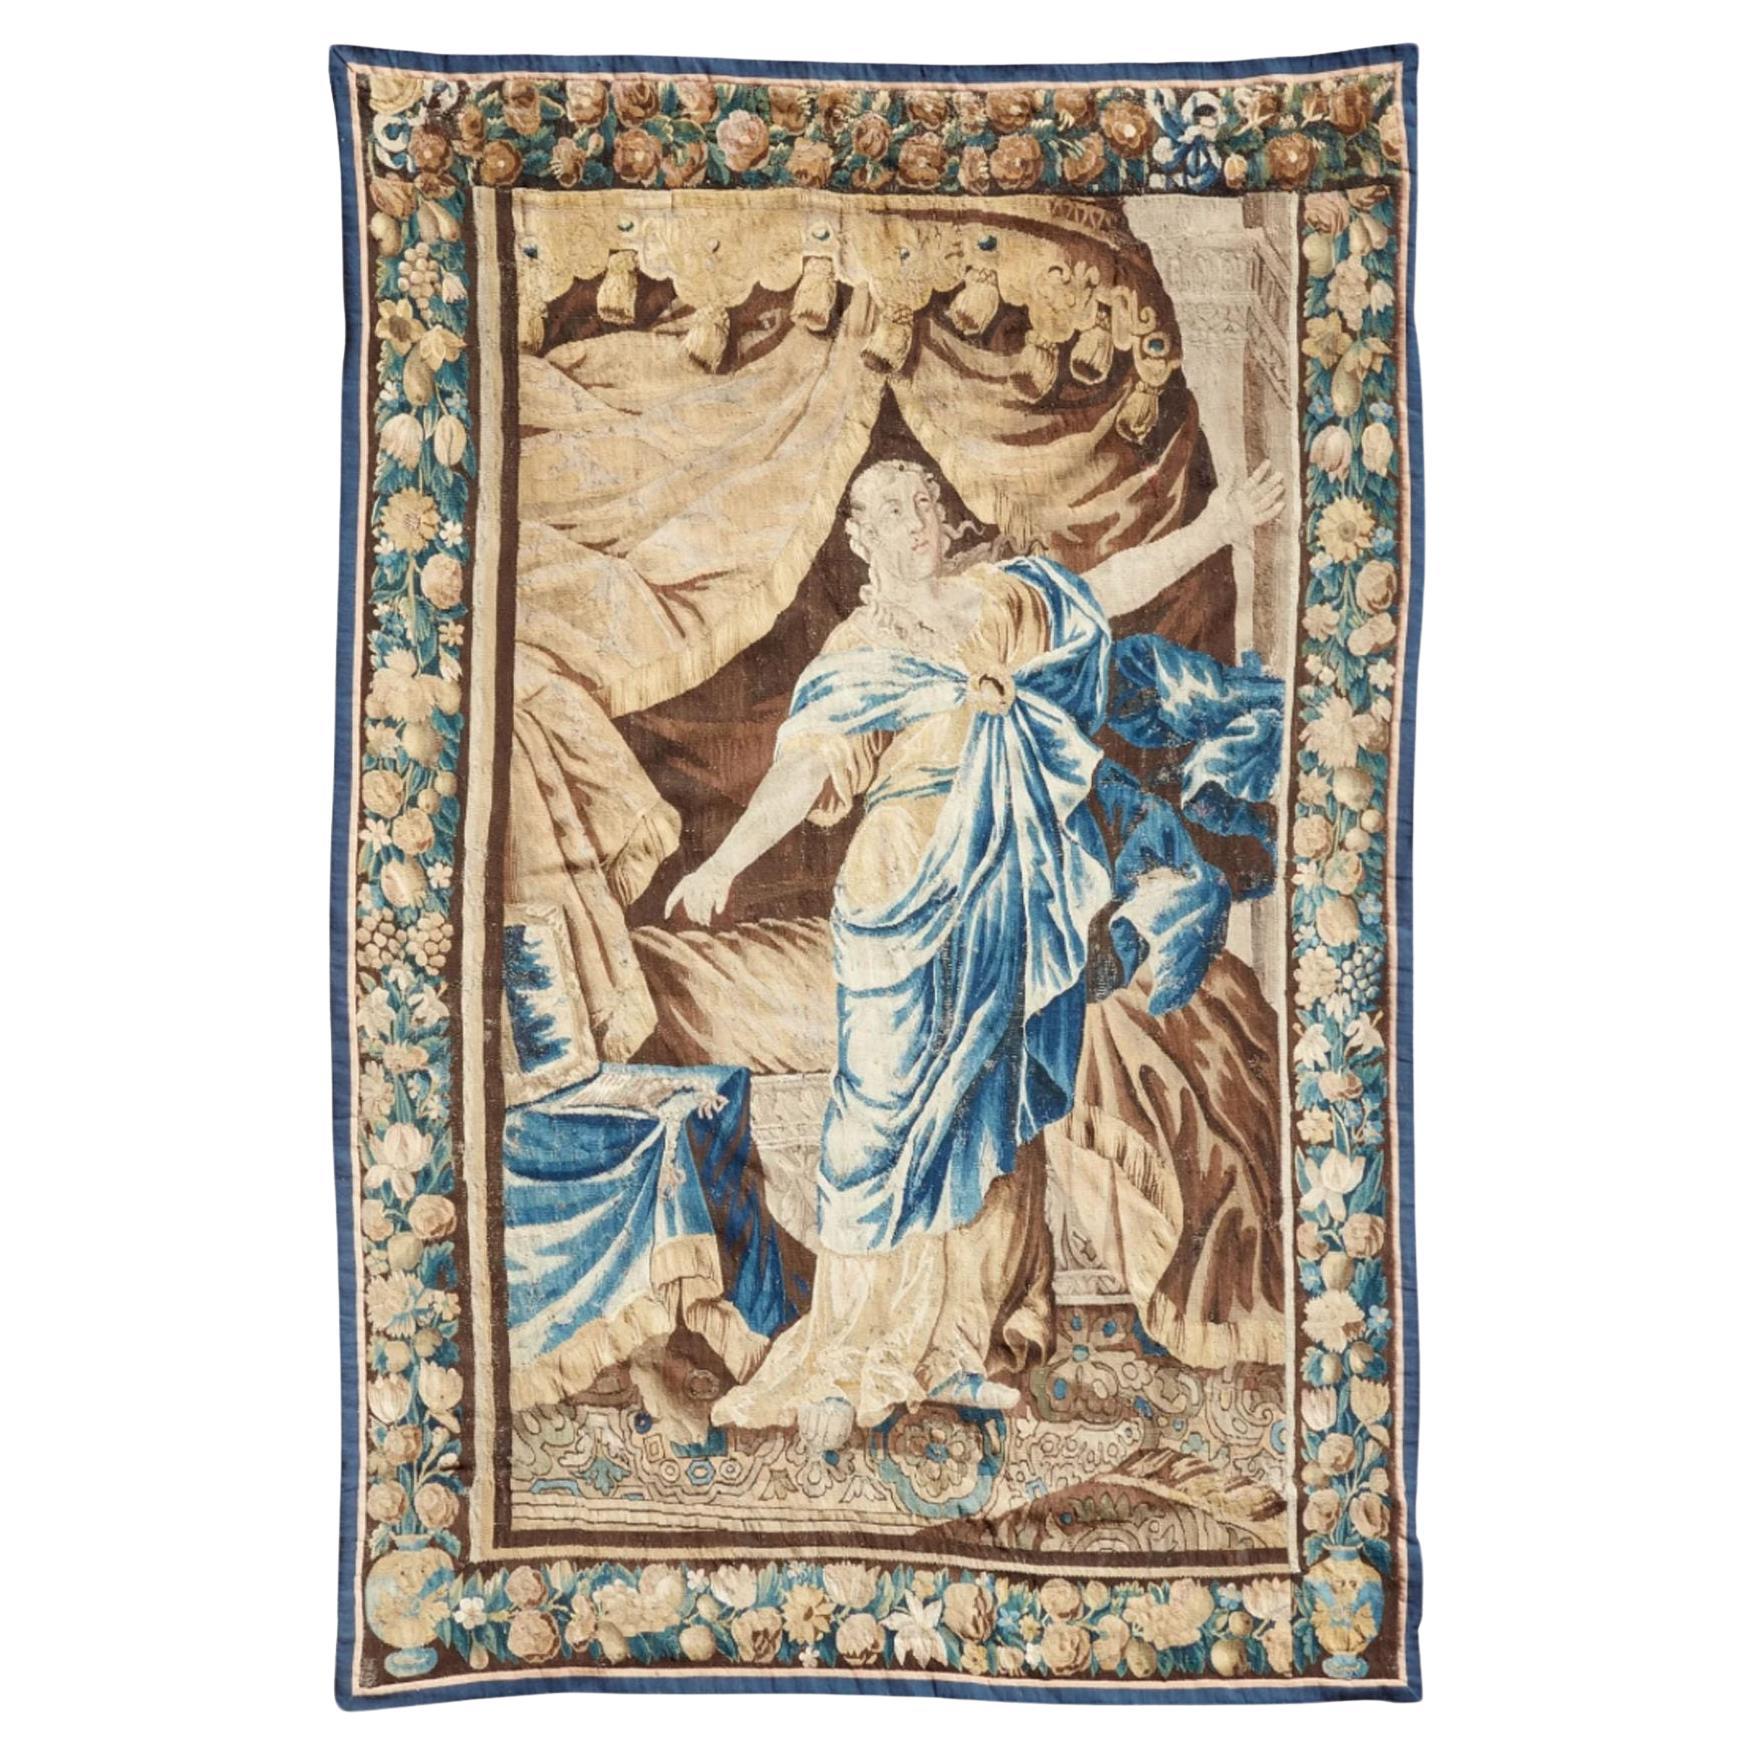 17th Century Flemish Baroque Tapestry 